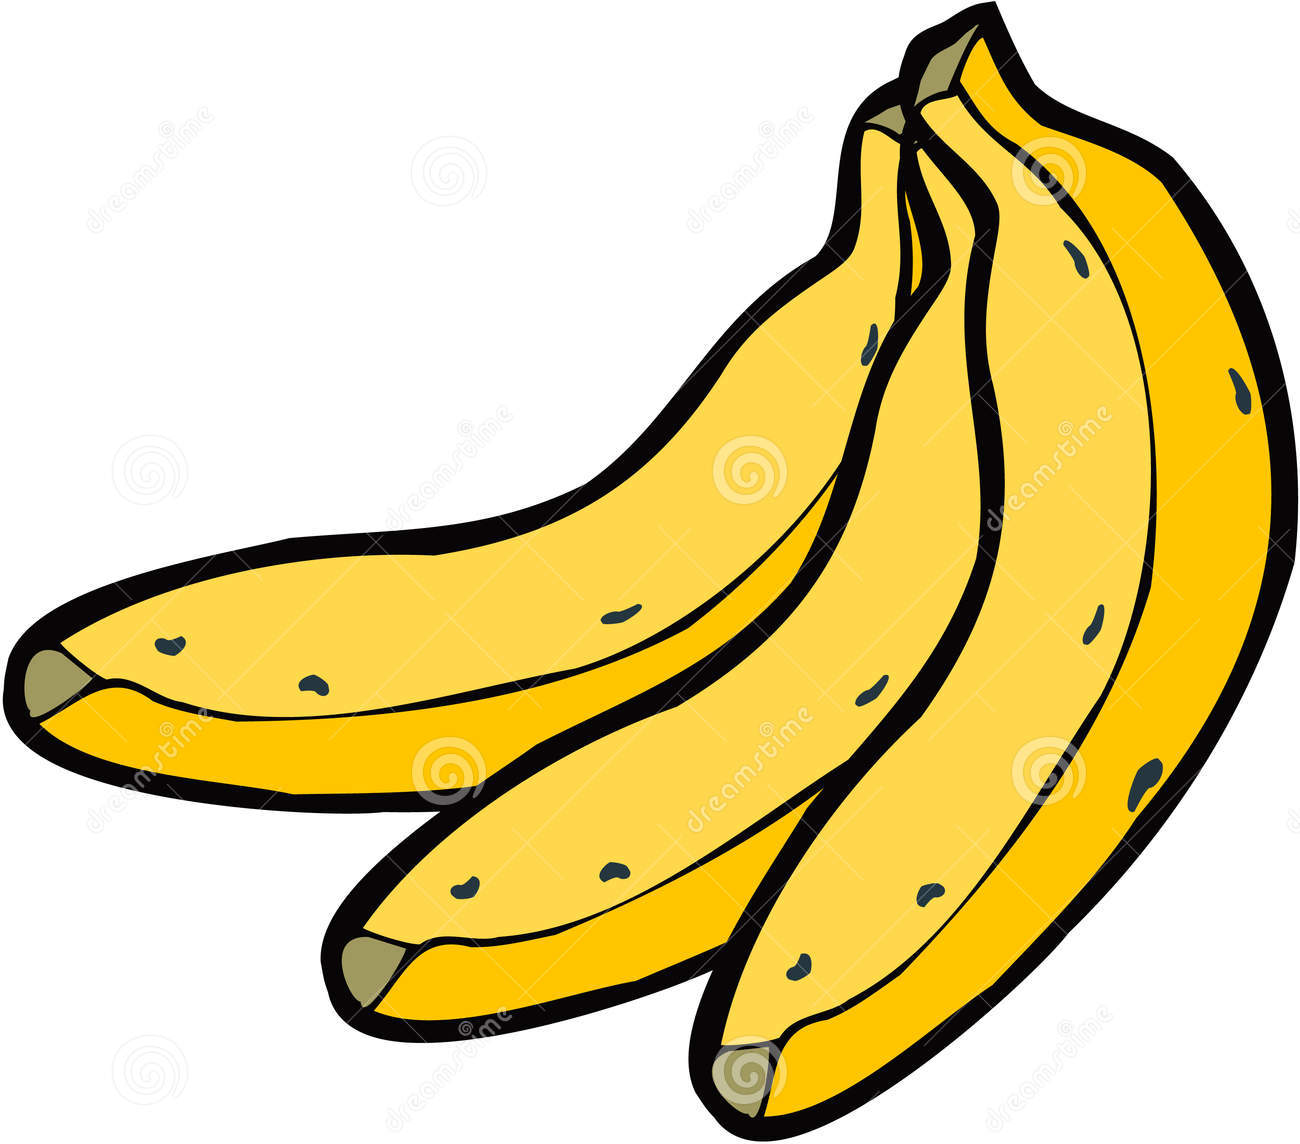 banana clipart printable